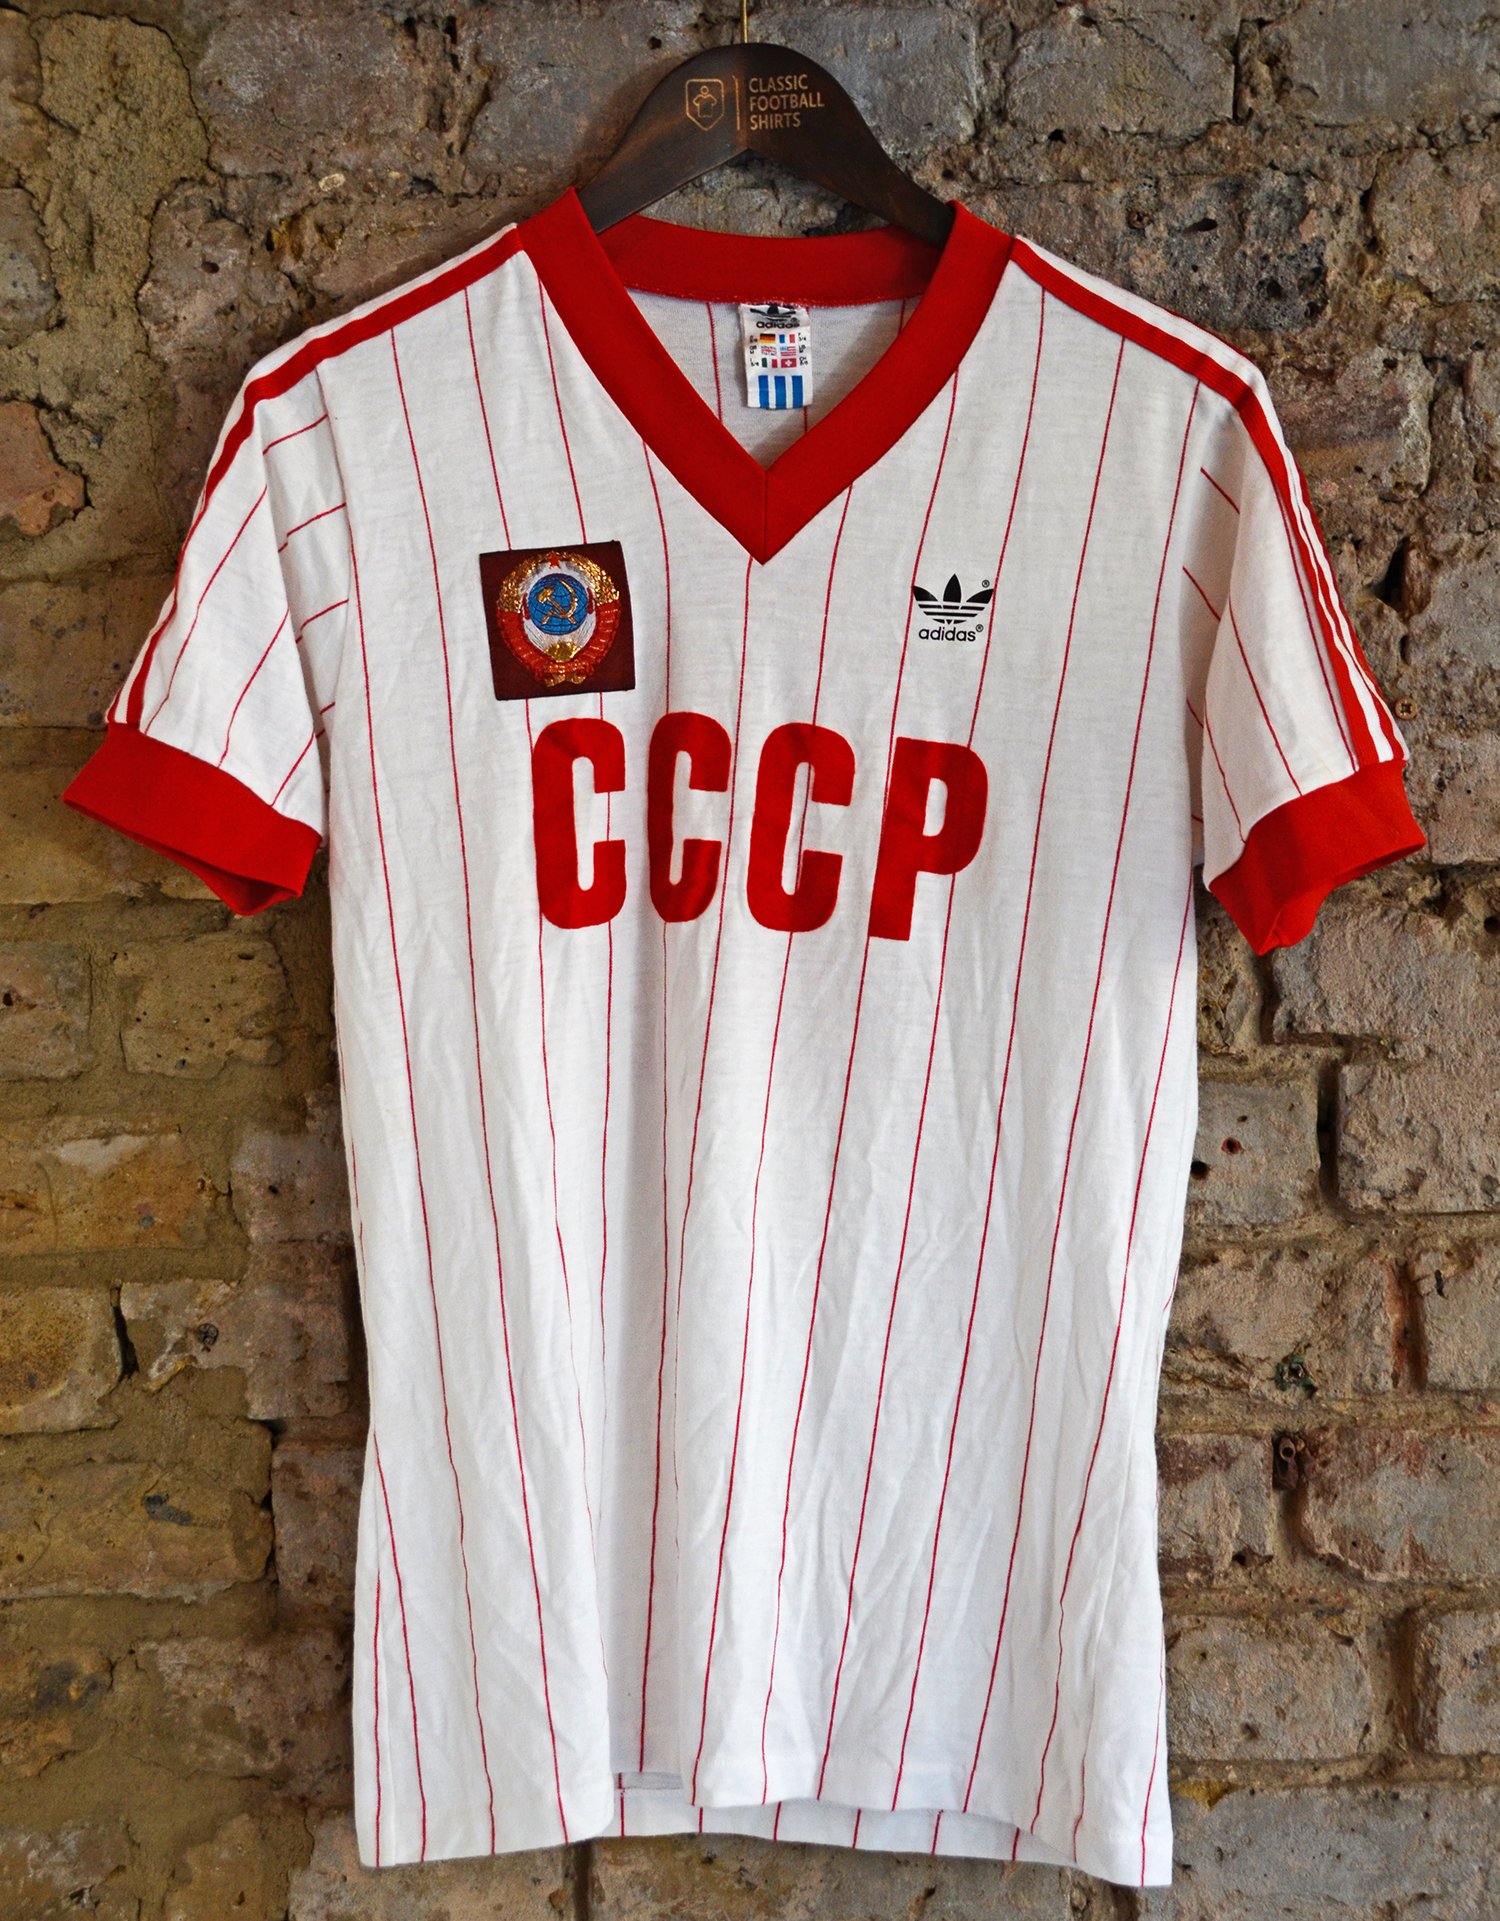 Classic Football Shirts al "CCCP x Adidas https://t.co/ZYk0by7o9r"